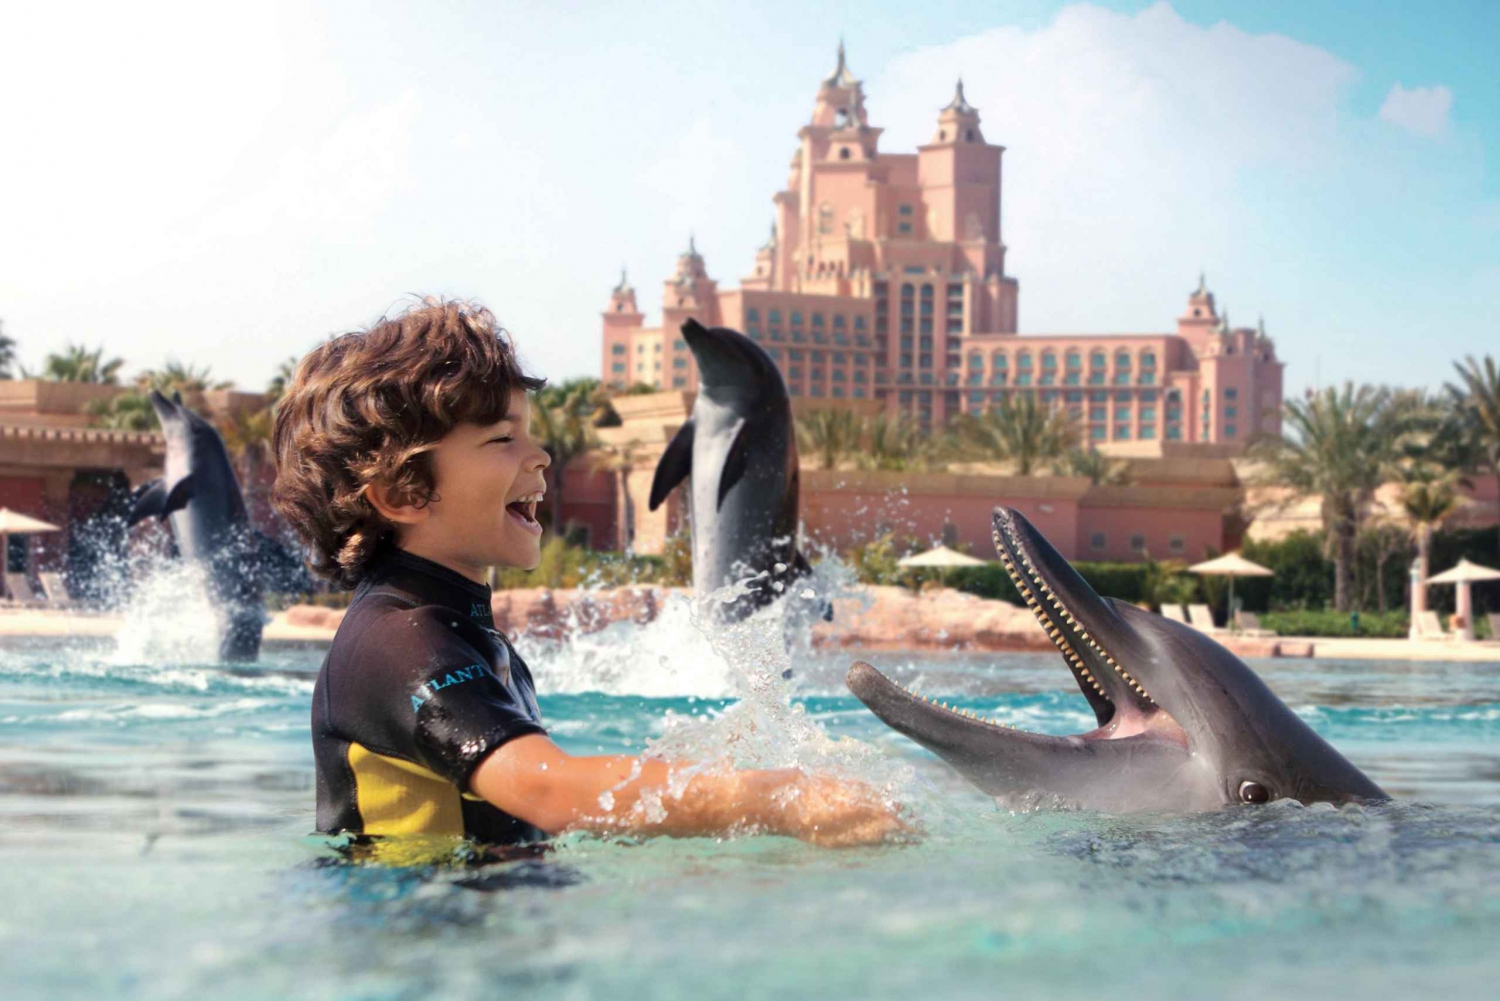 Dubai: Dolphin Encounter at Atlantis Waterpark